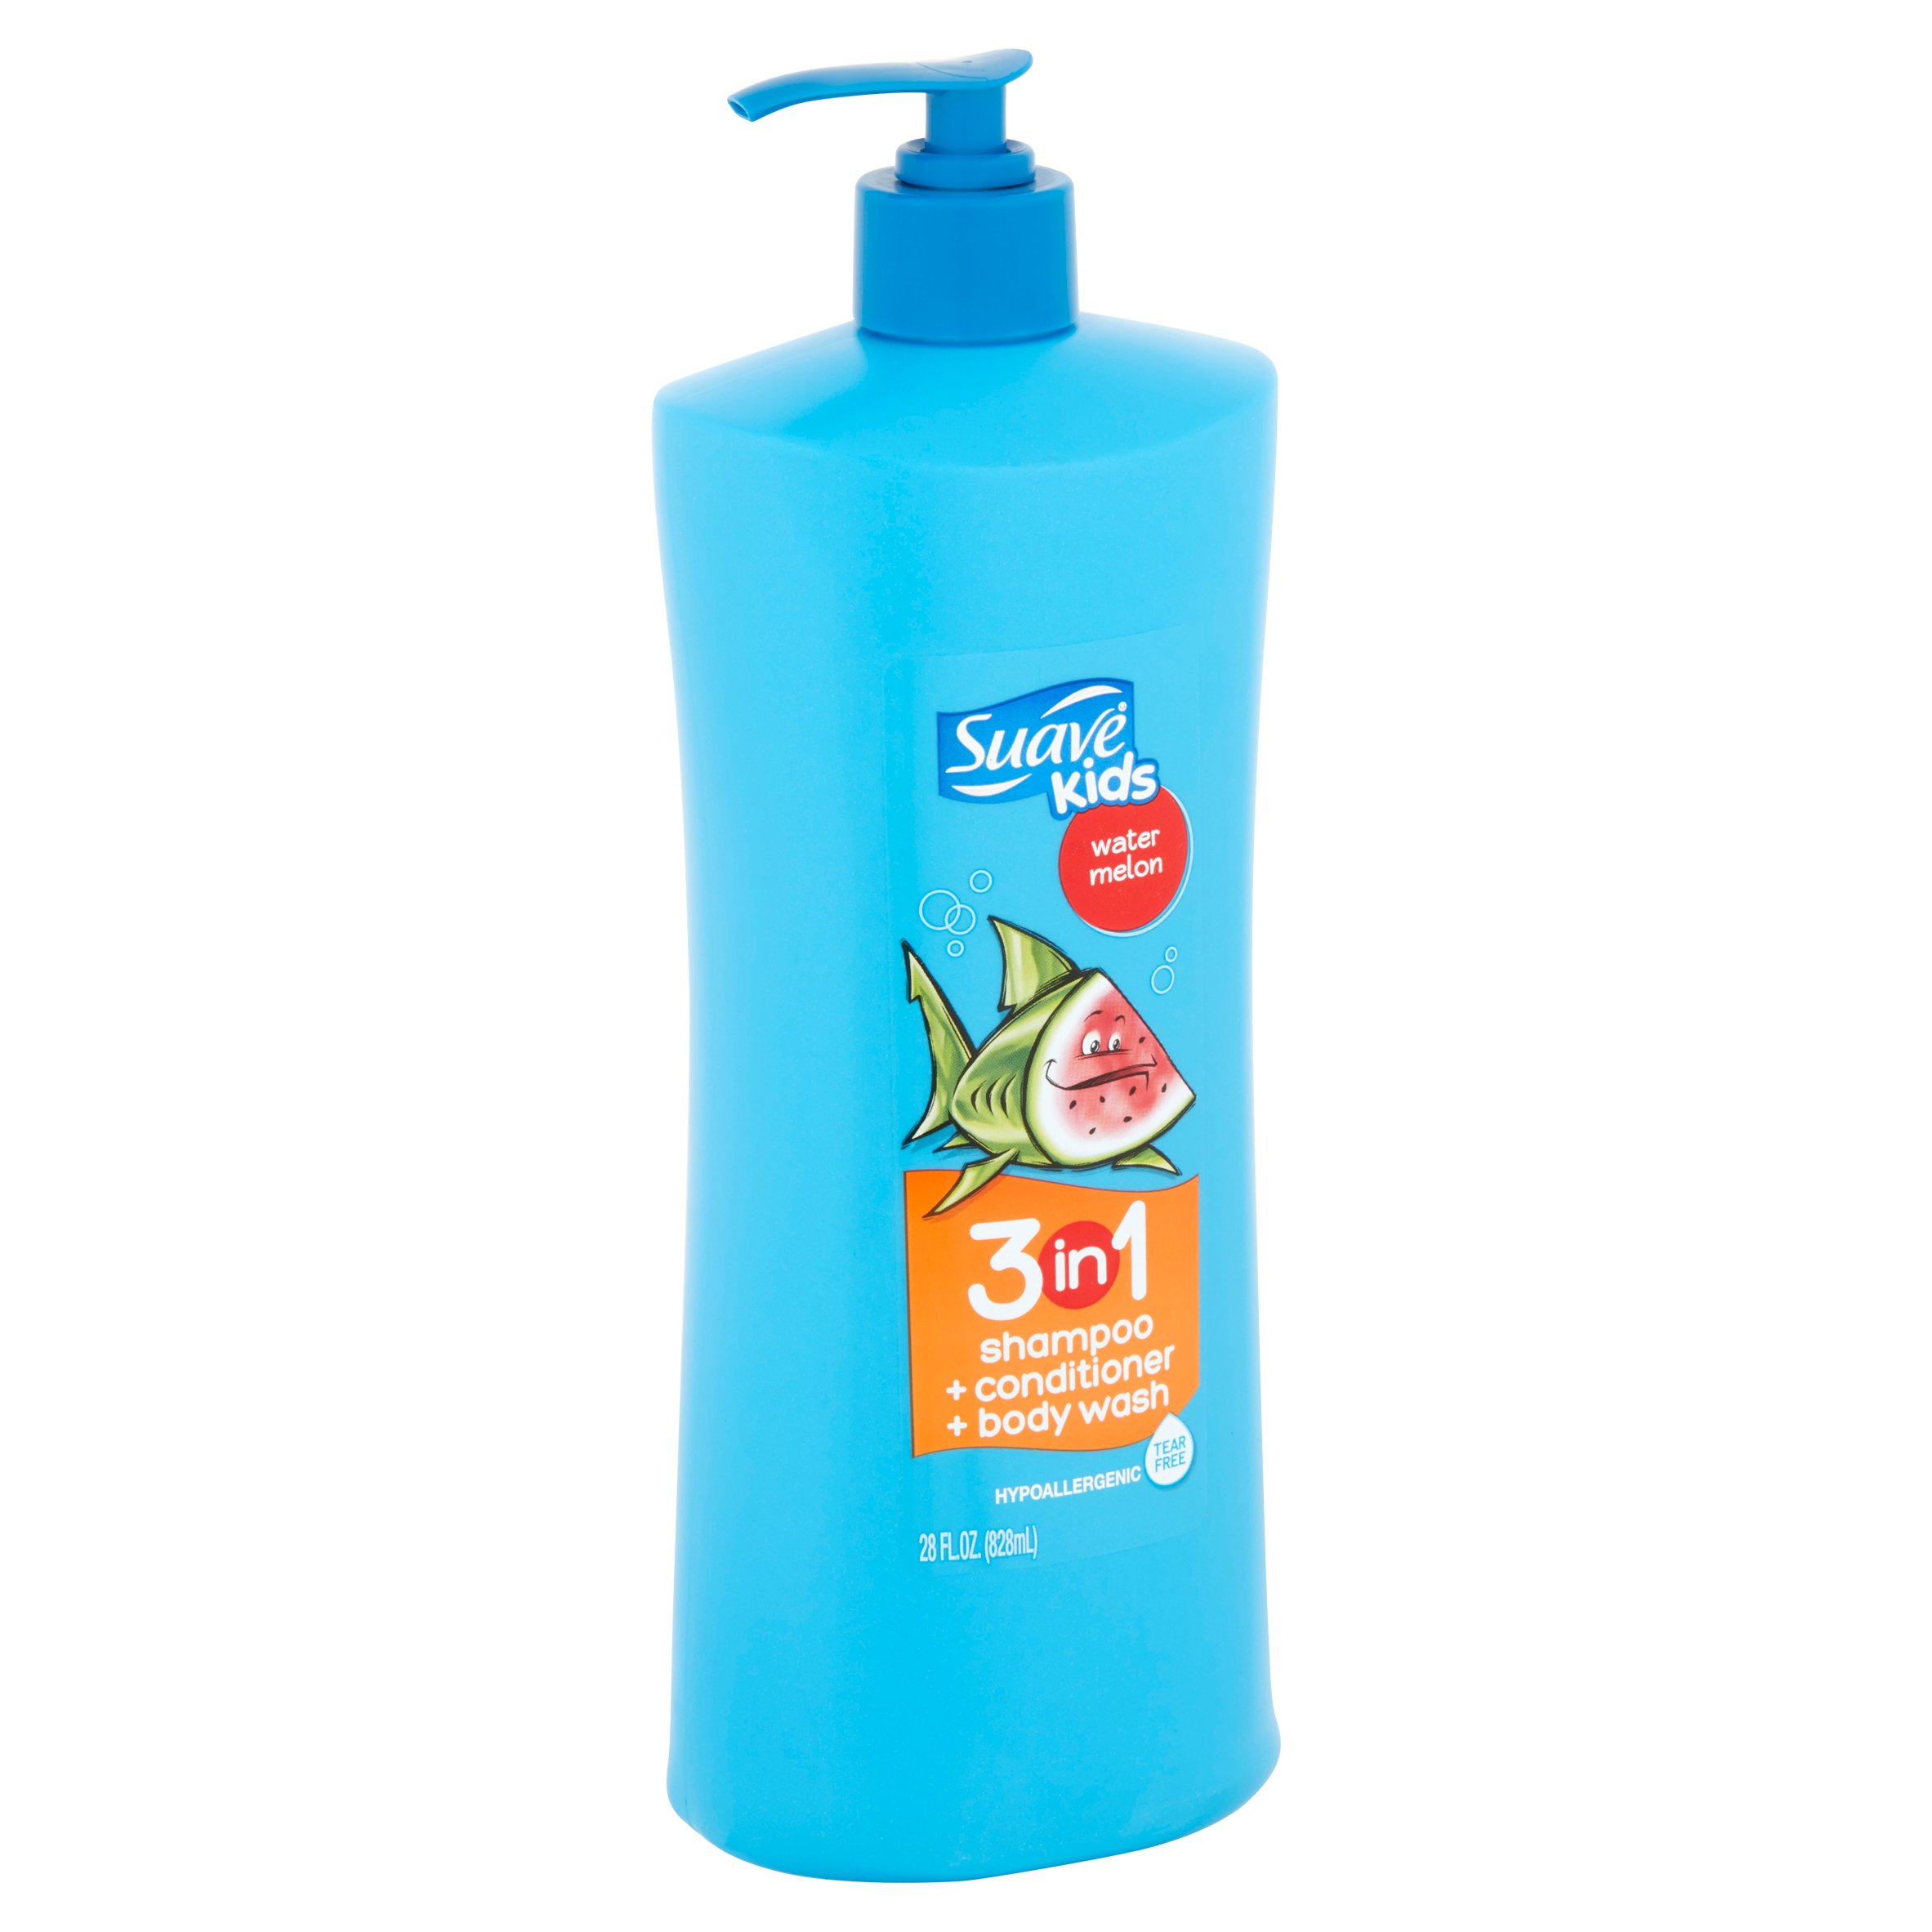 Suave Kids Water Melon 3 in 1 Shampoo + Conditioner + Body Wash, 28 fl oz - image 2 of 4